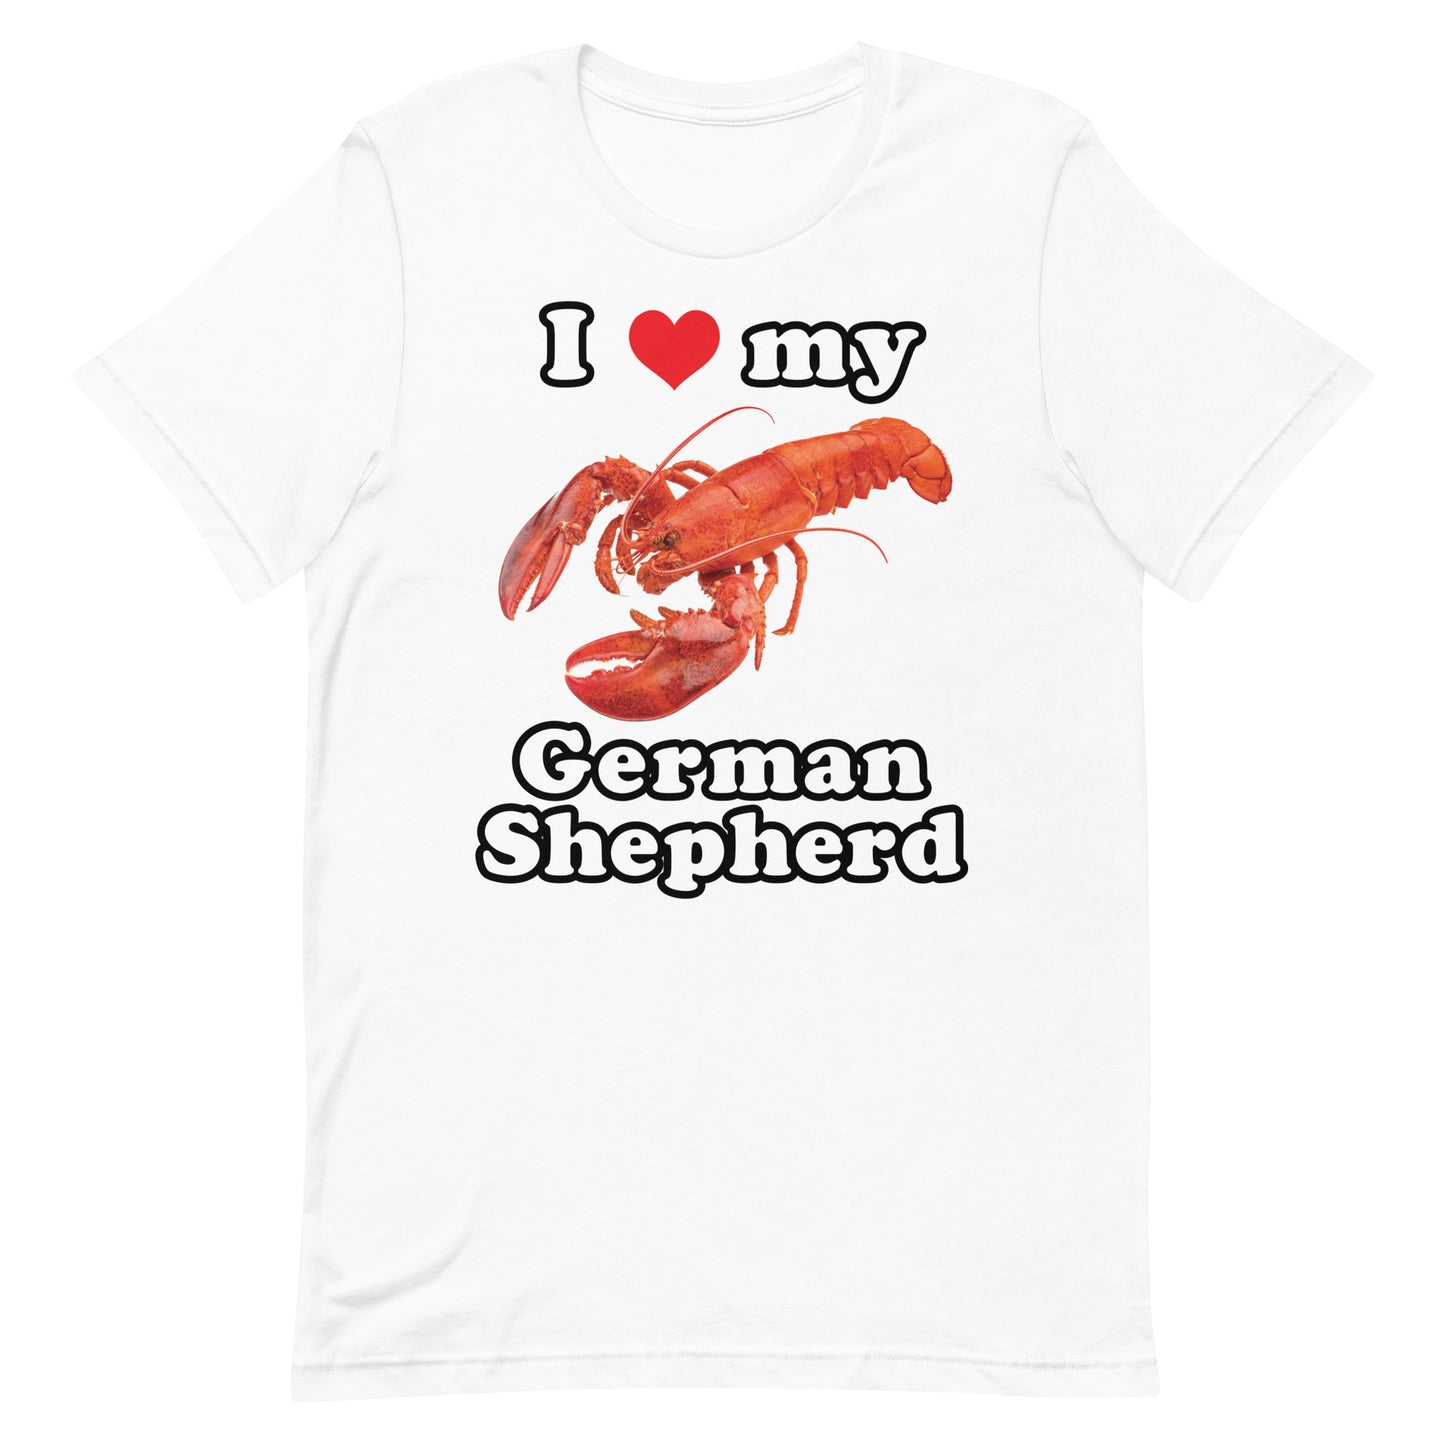 I Love My German Shepard (Lobster) Unisex t-shirt